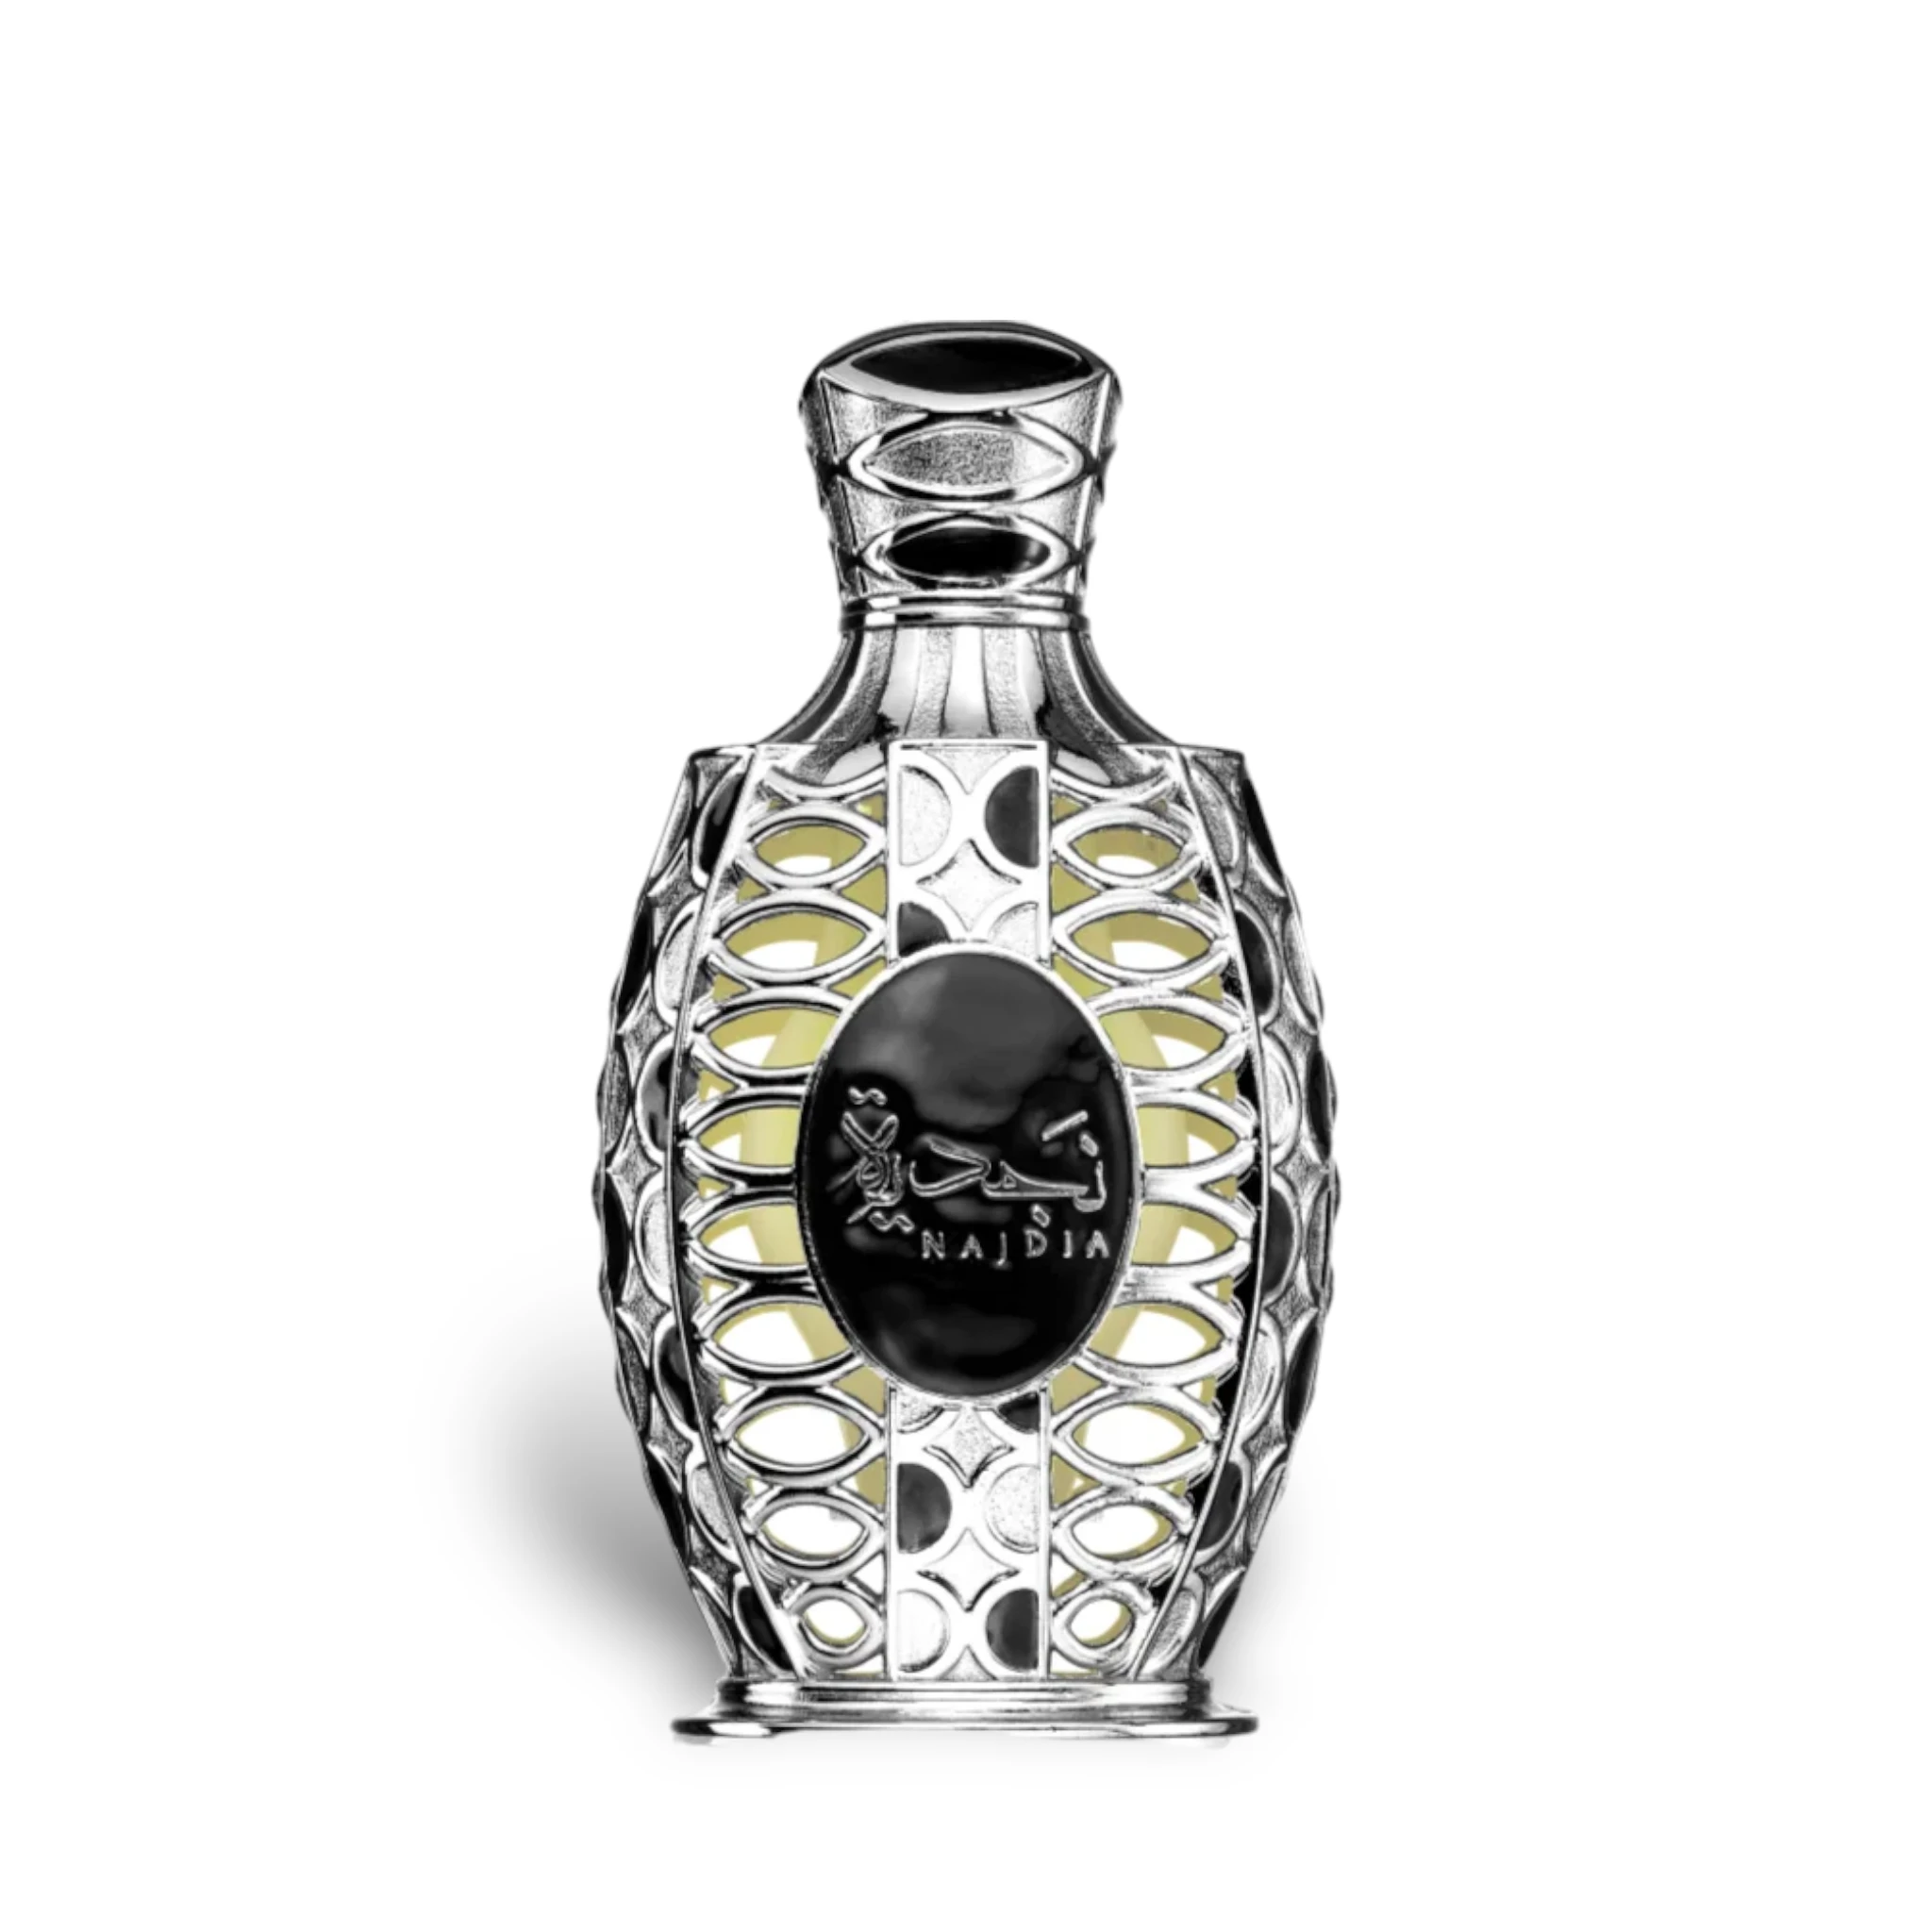 Najdia Concentrated Perfume Oil Attar 25Ml By Lattafa